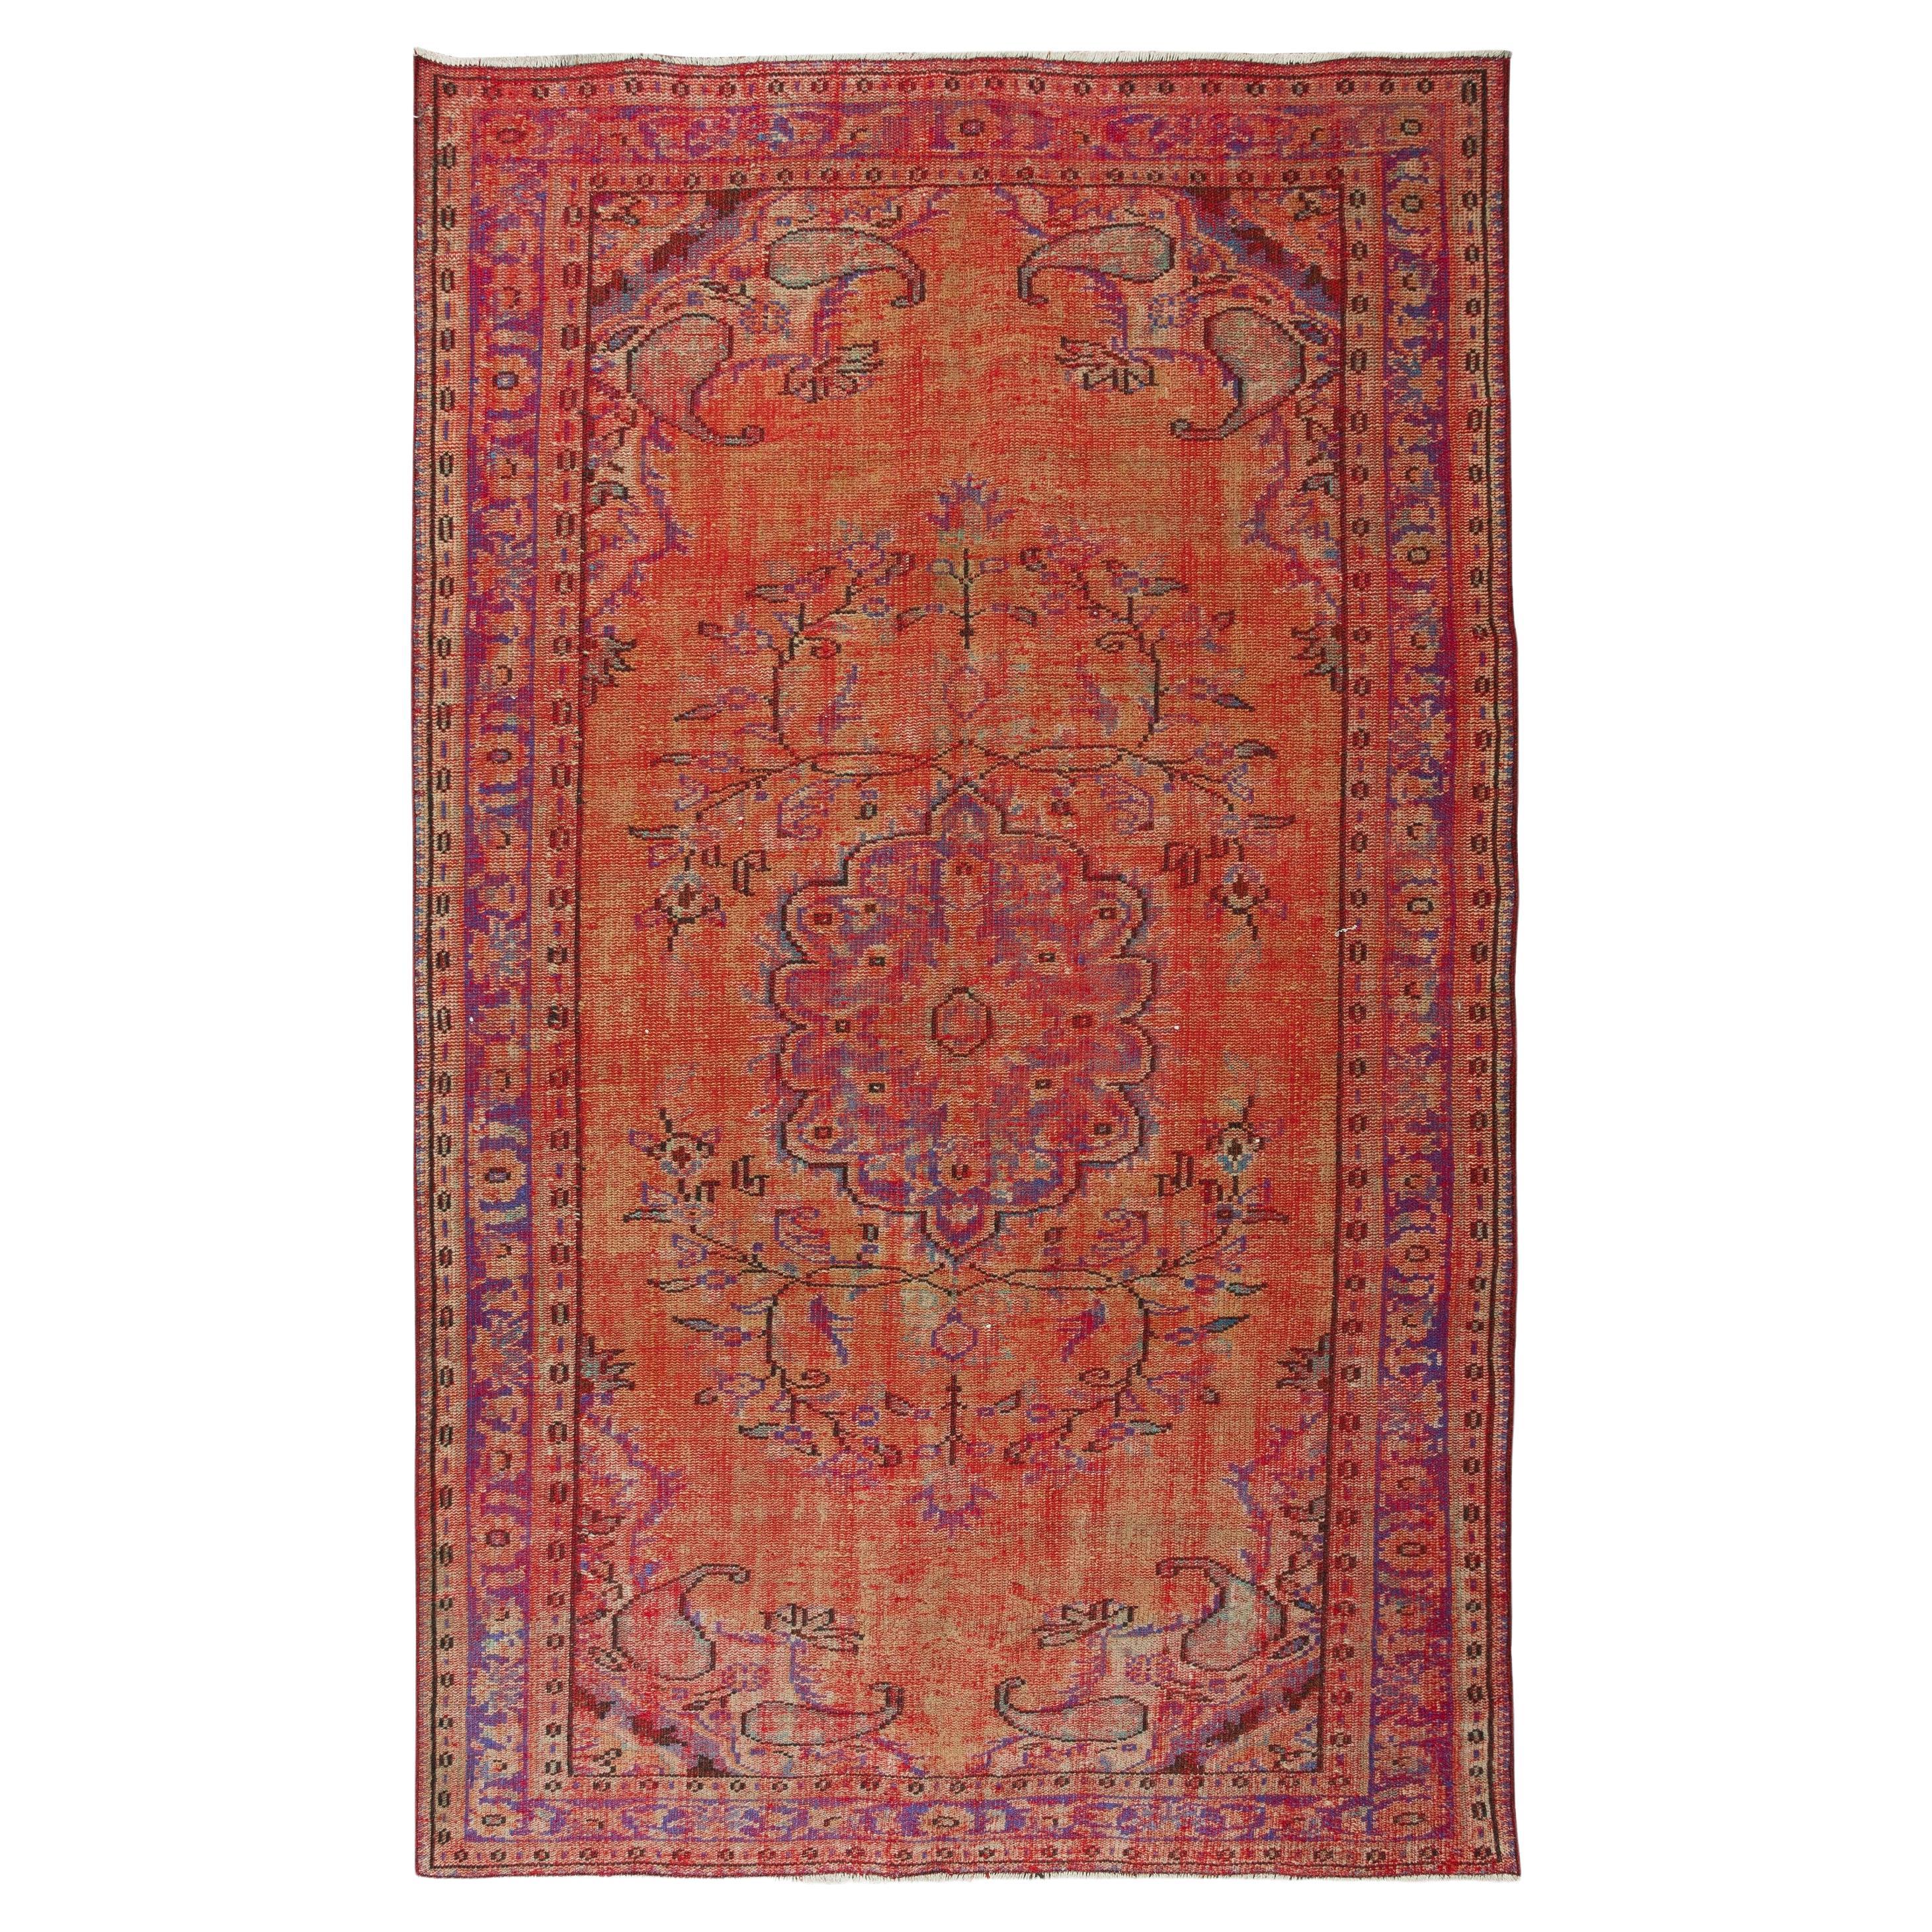 1960s, Orange Overdyed Rug for Modern Interiors, Turkish Handmade Carpet